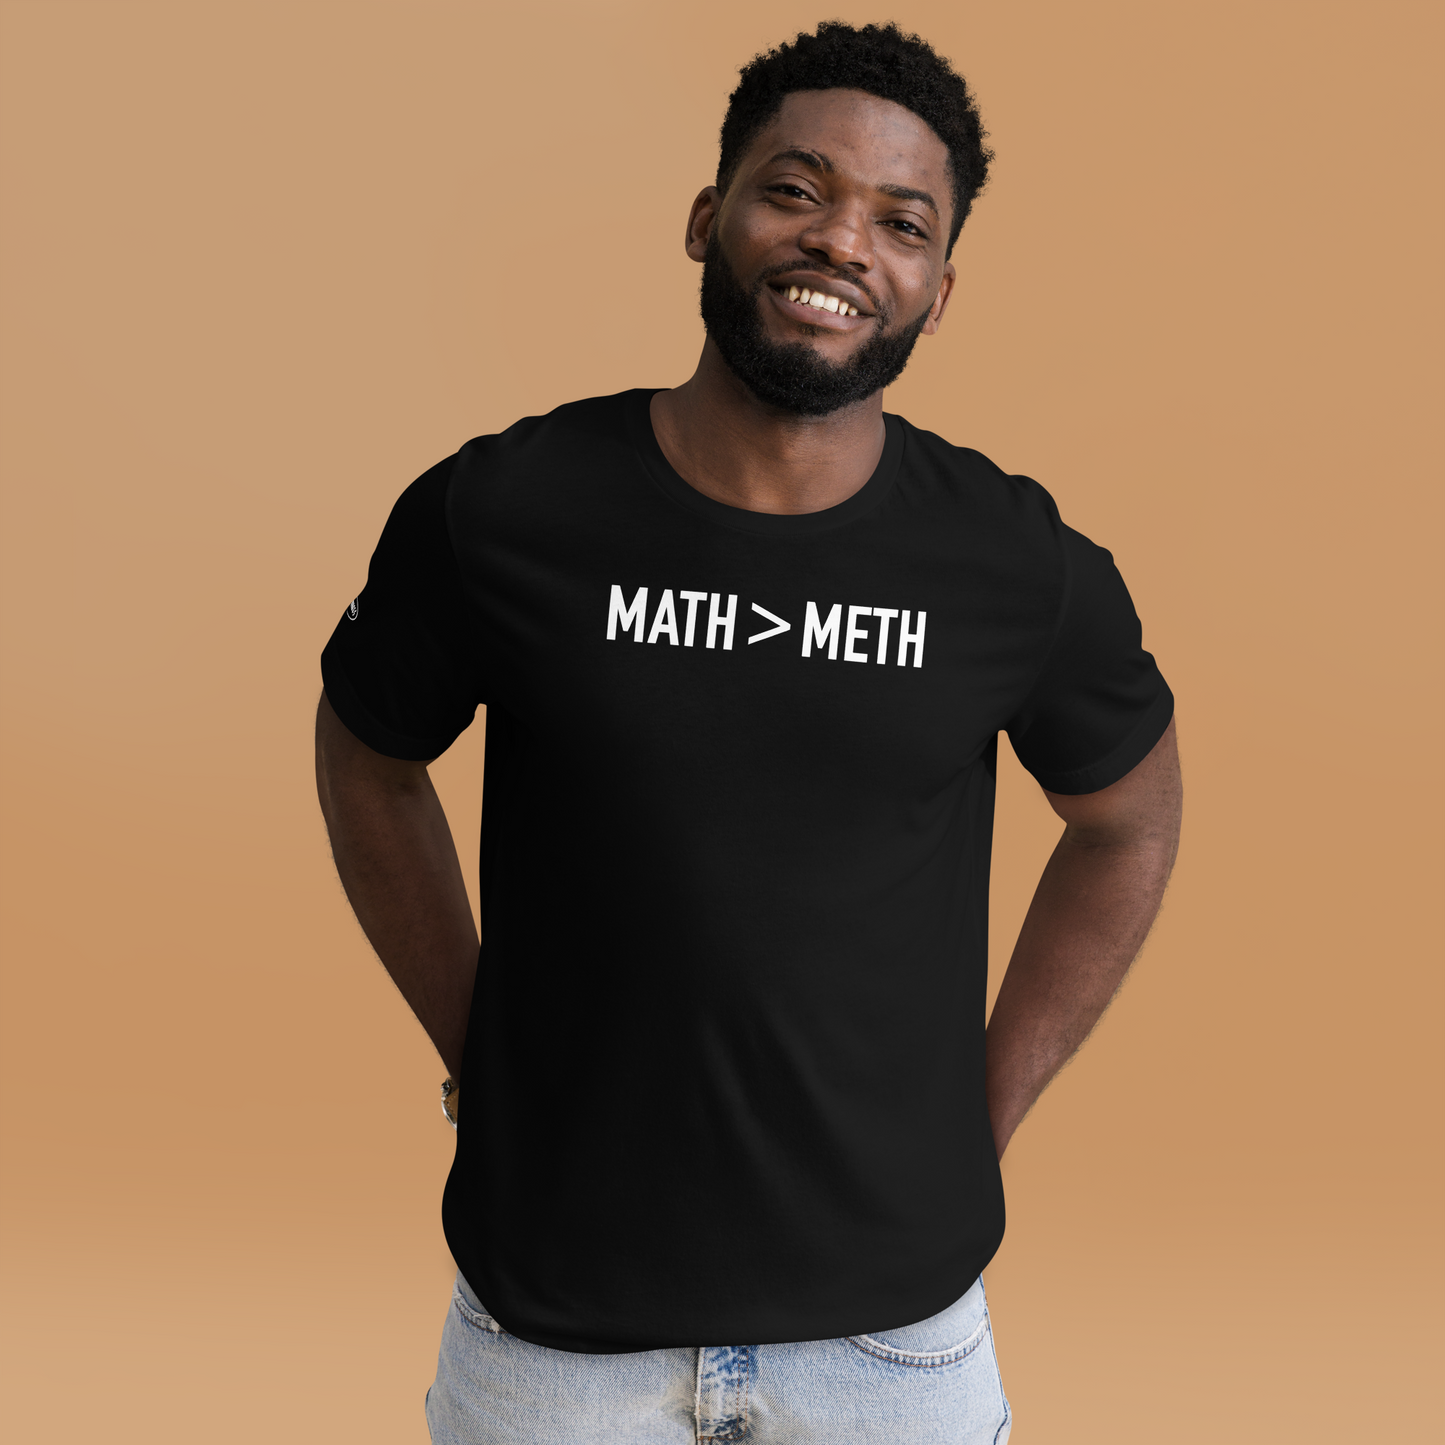 Math > Meth - Funny T-Shirt